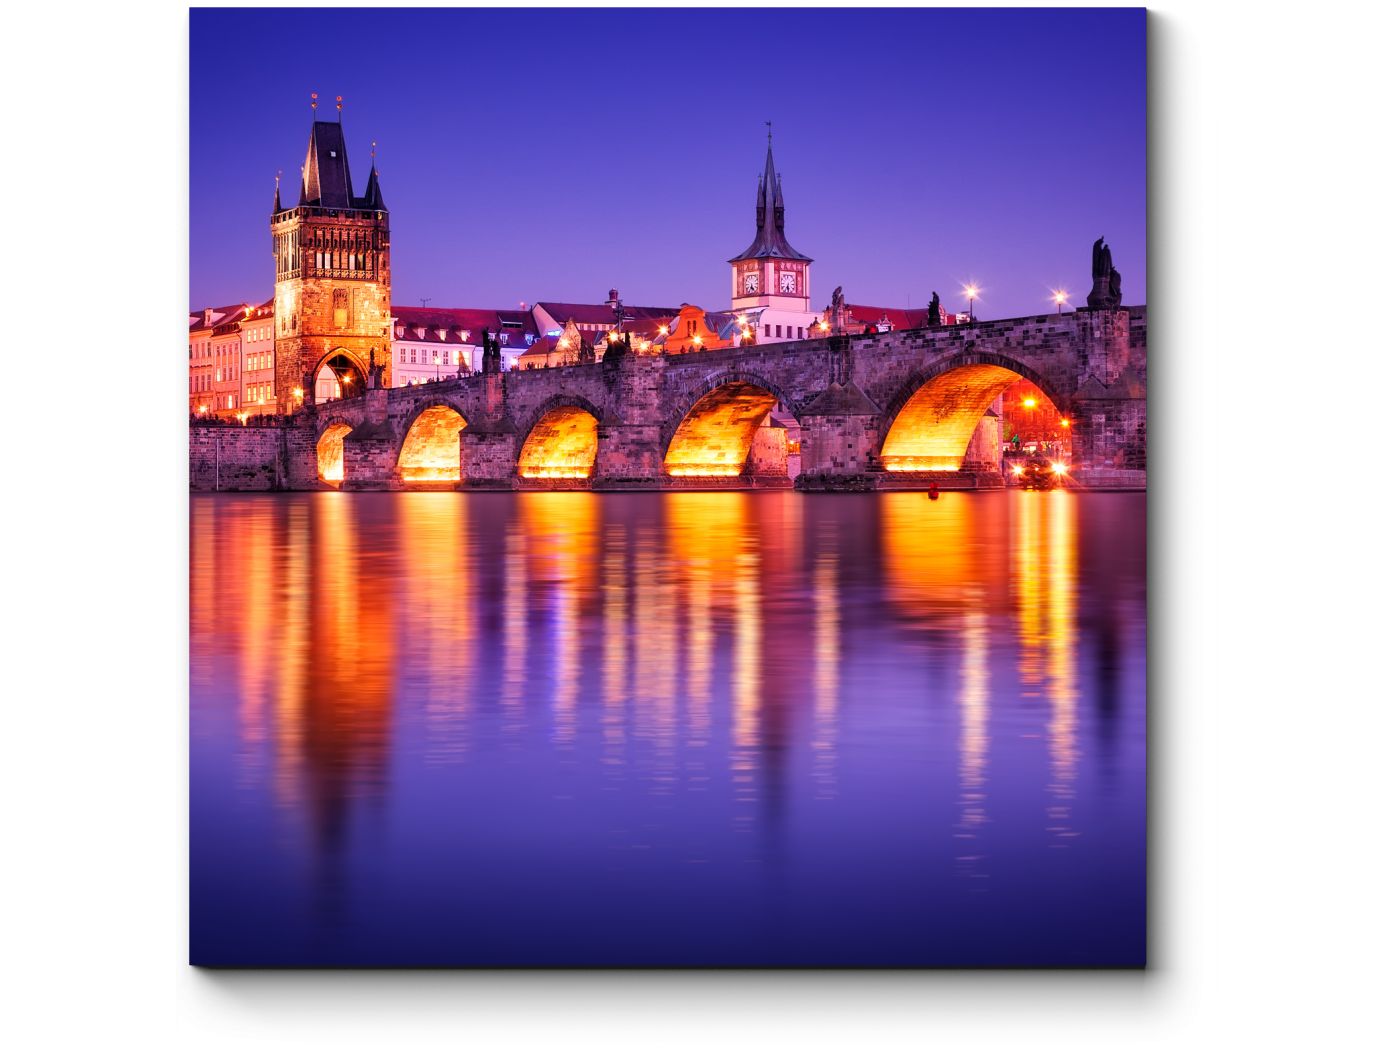 Карлов мост Прага Чехия